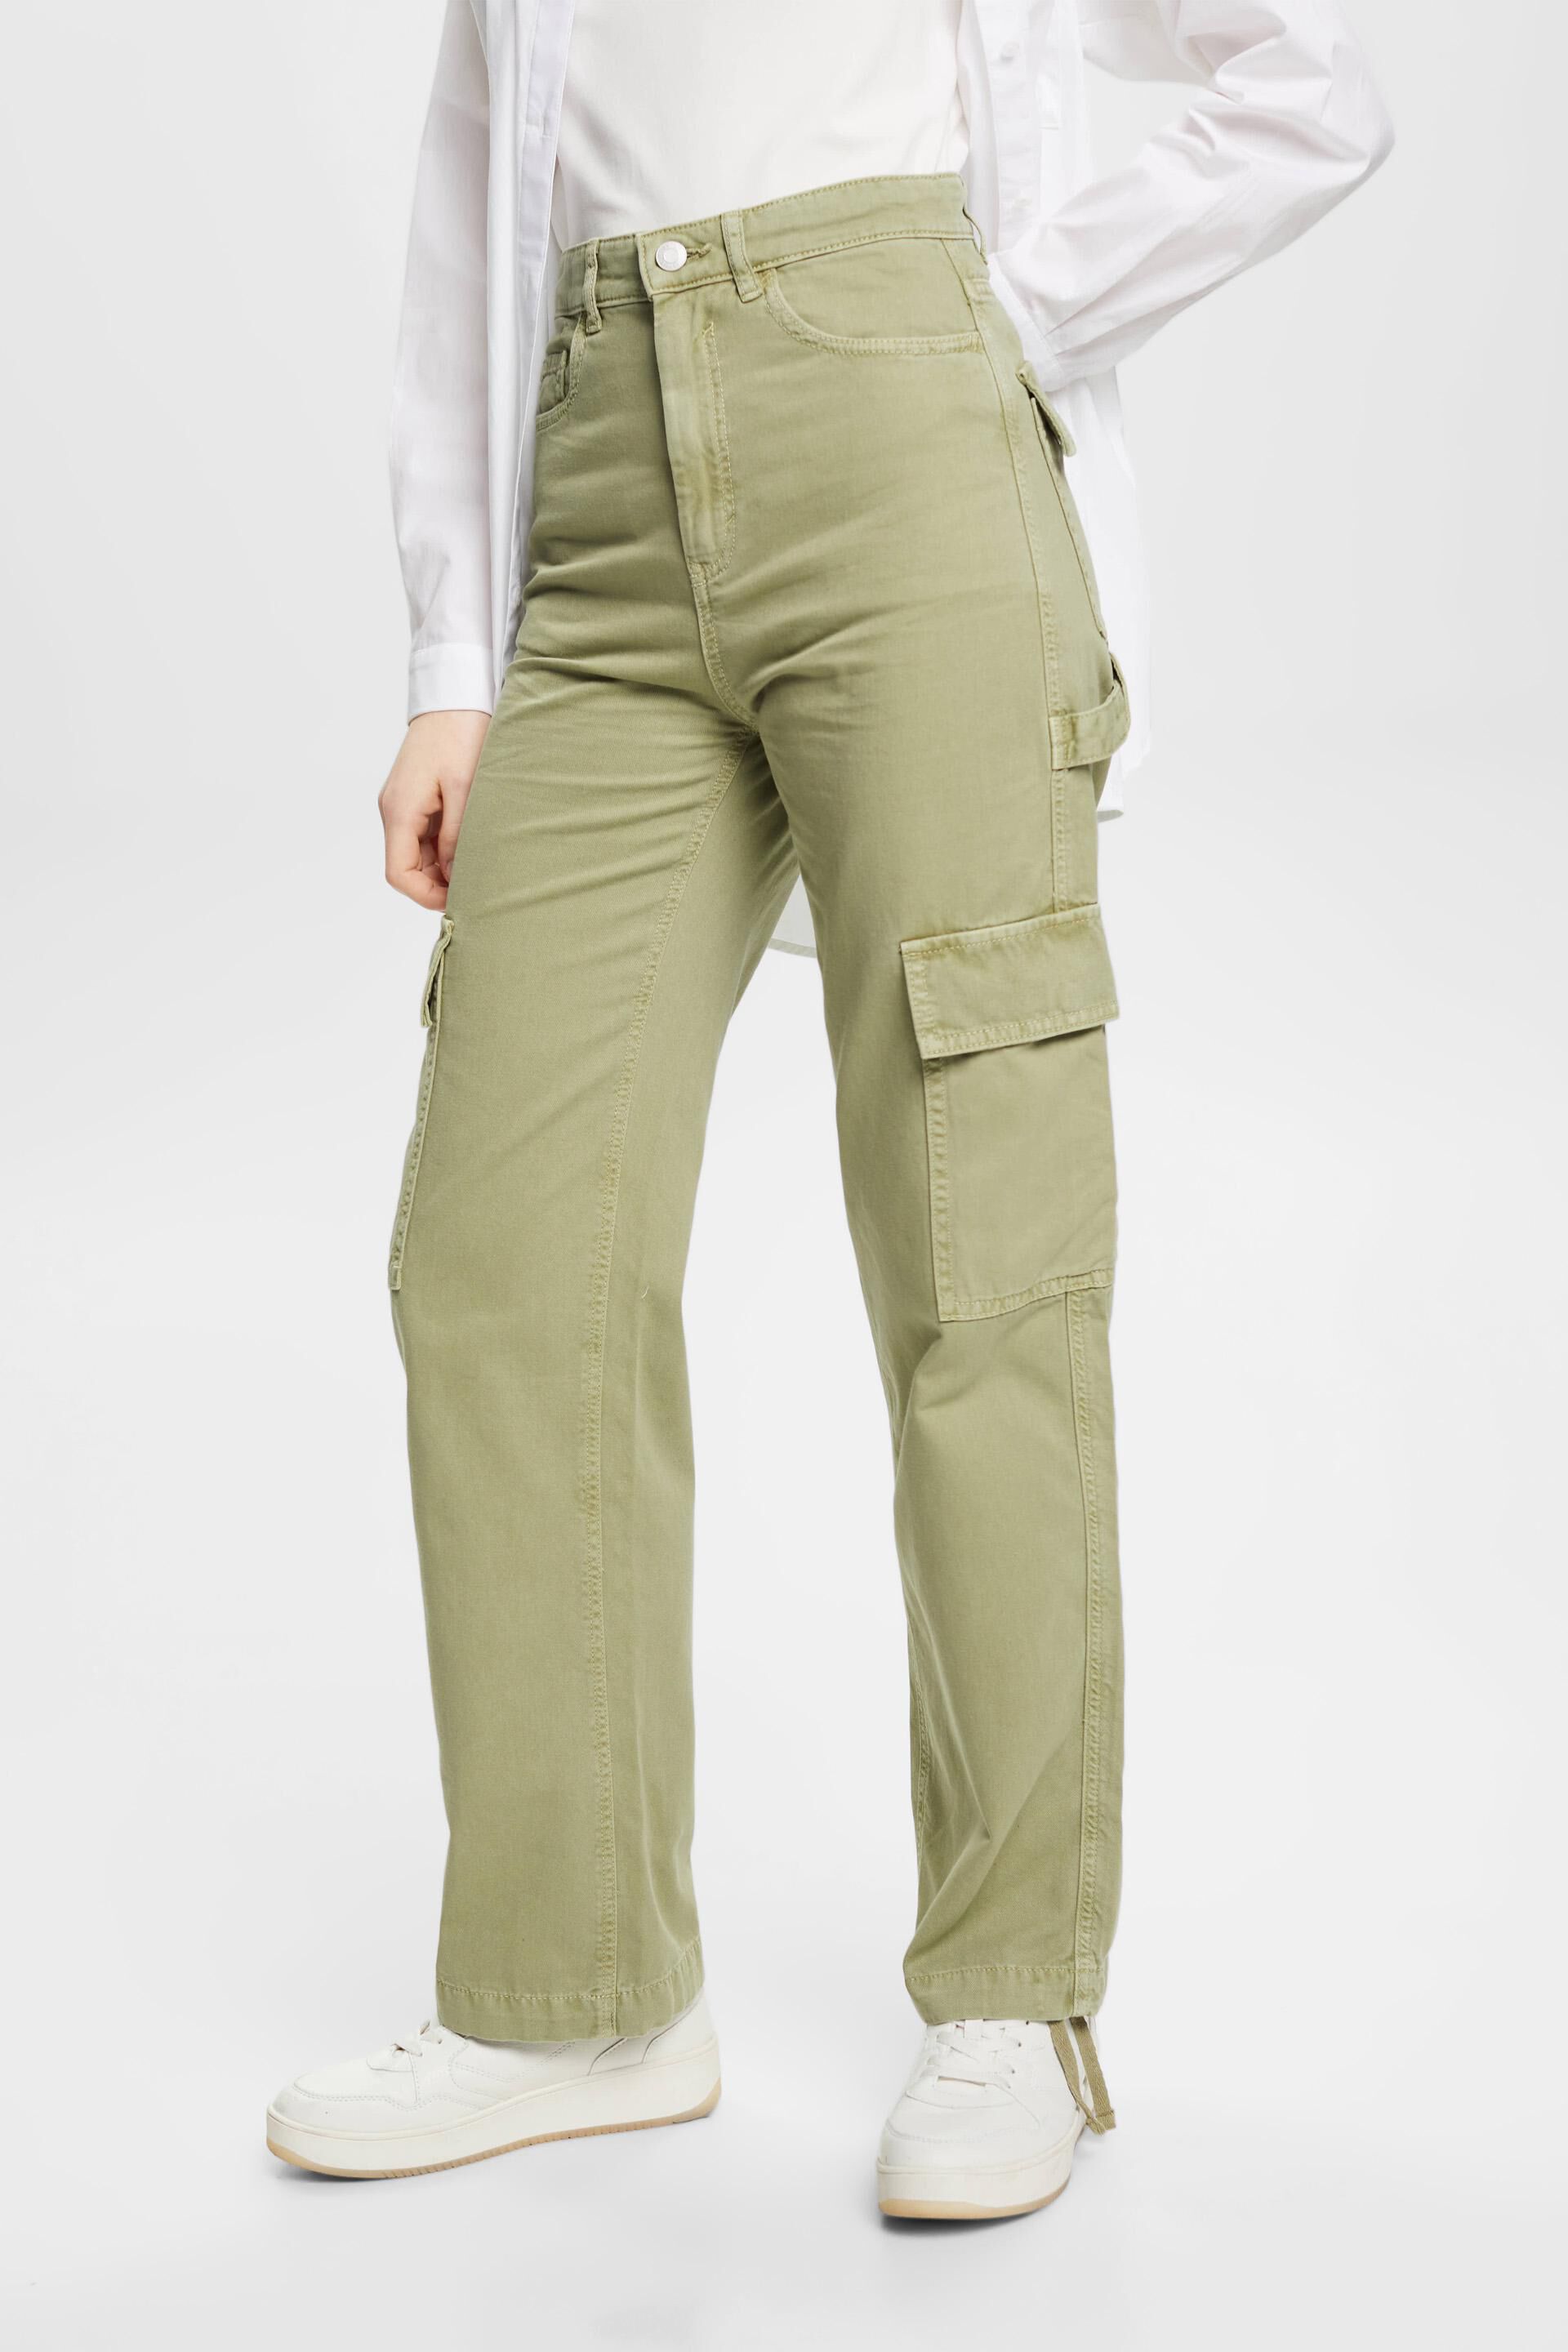 Dominance Stretchable cotton Cargo Trouser | Cargo Pants - Grey – Dominance  PK